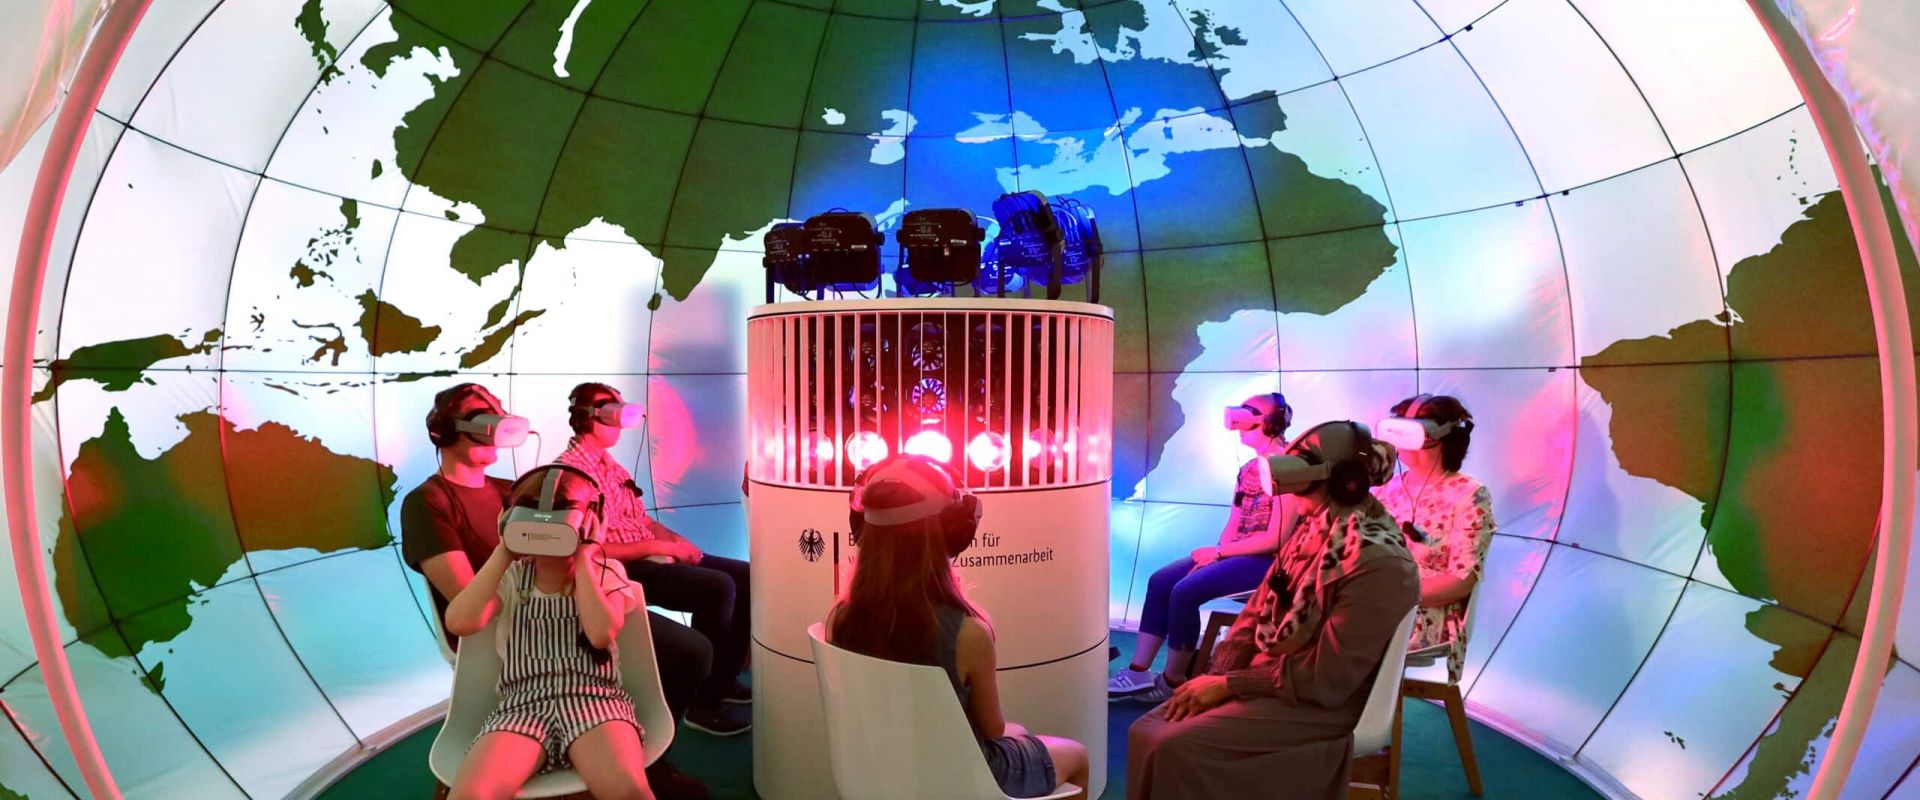 BMZ climate dome - multisensory 360-degree video trade fair installation